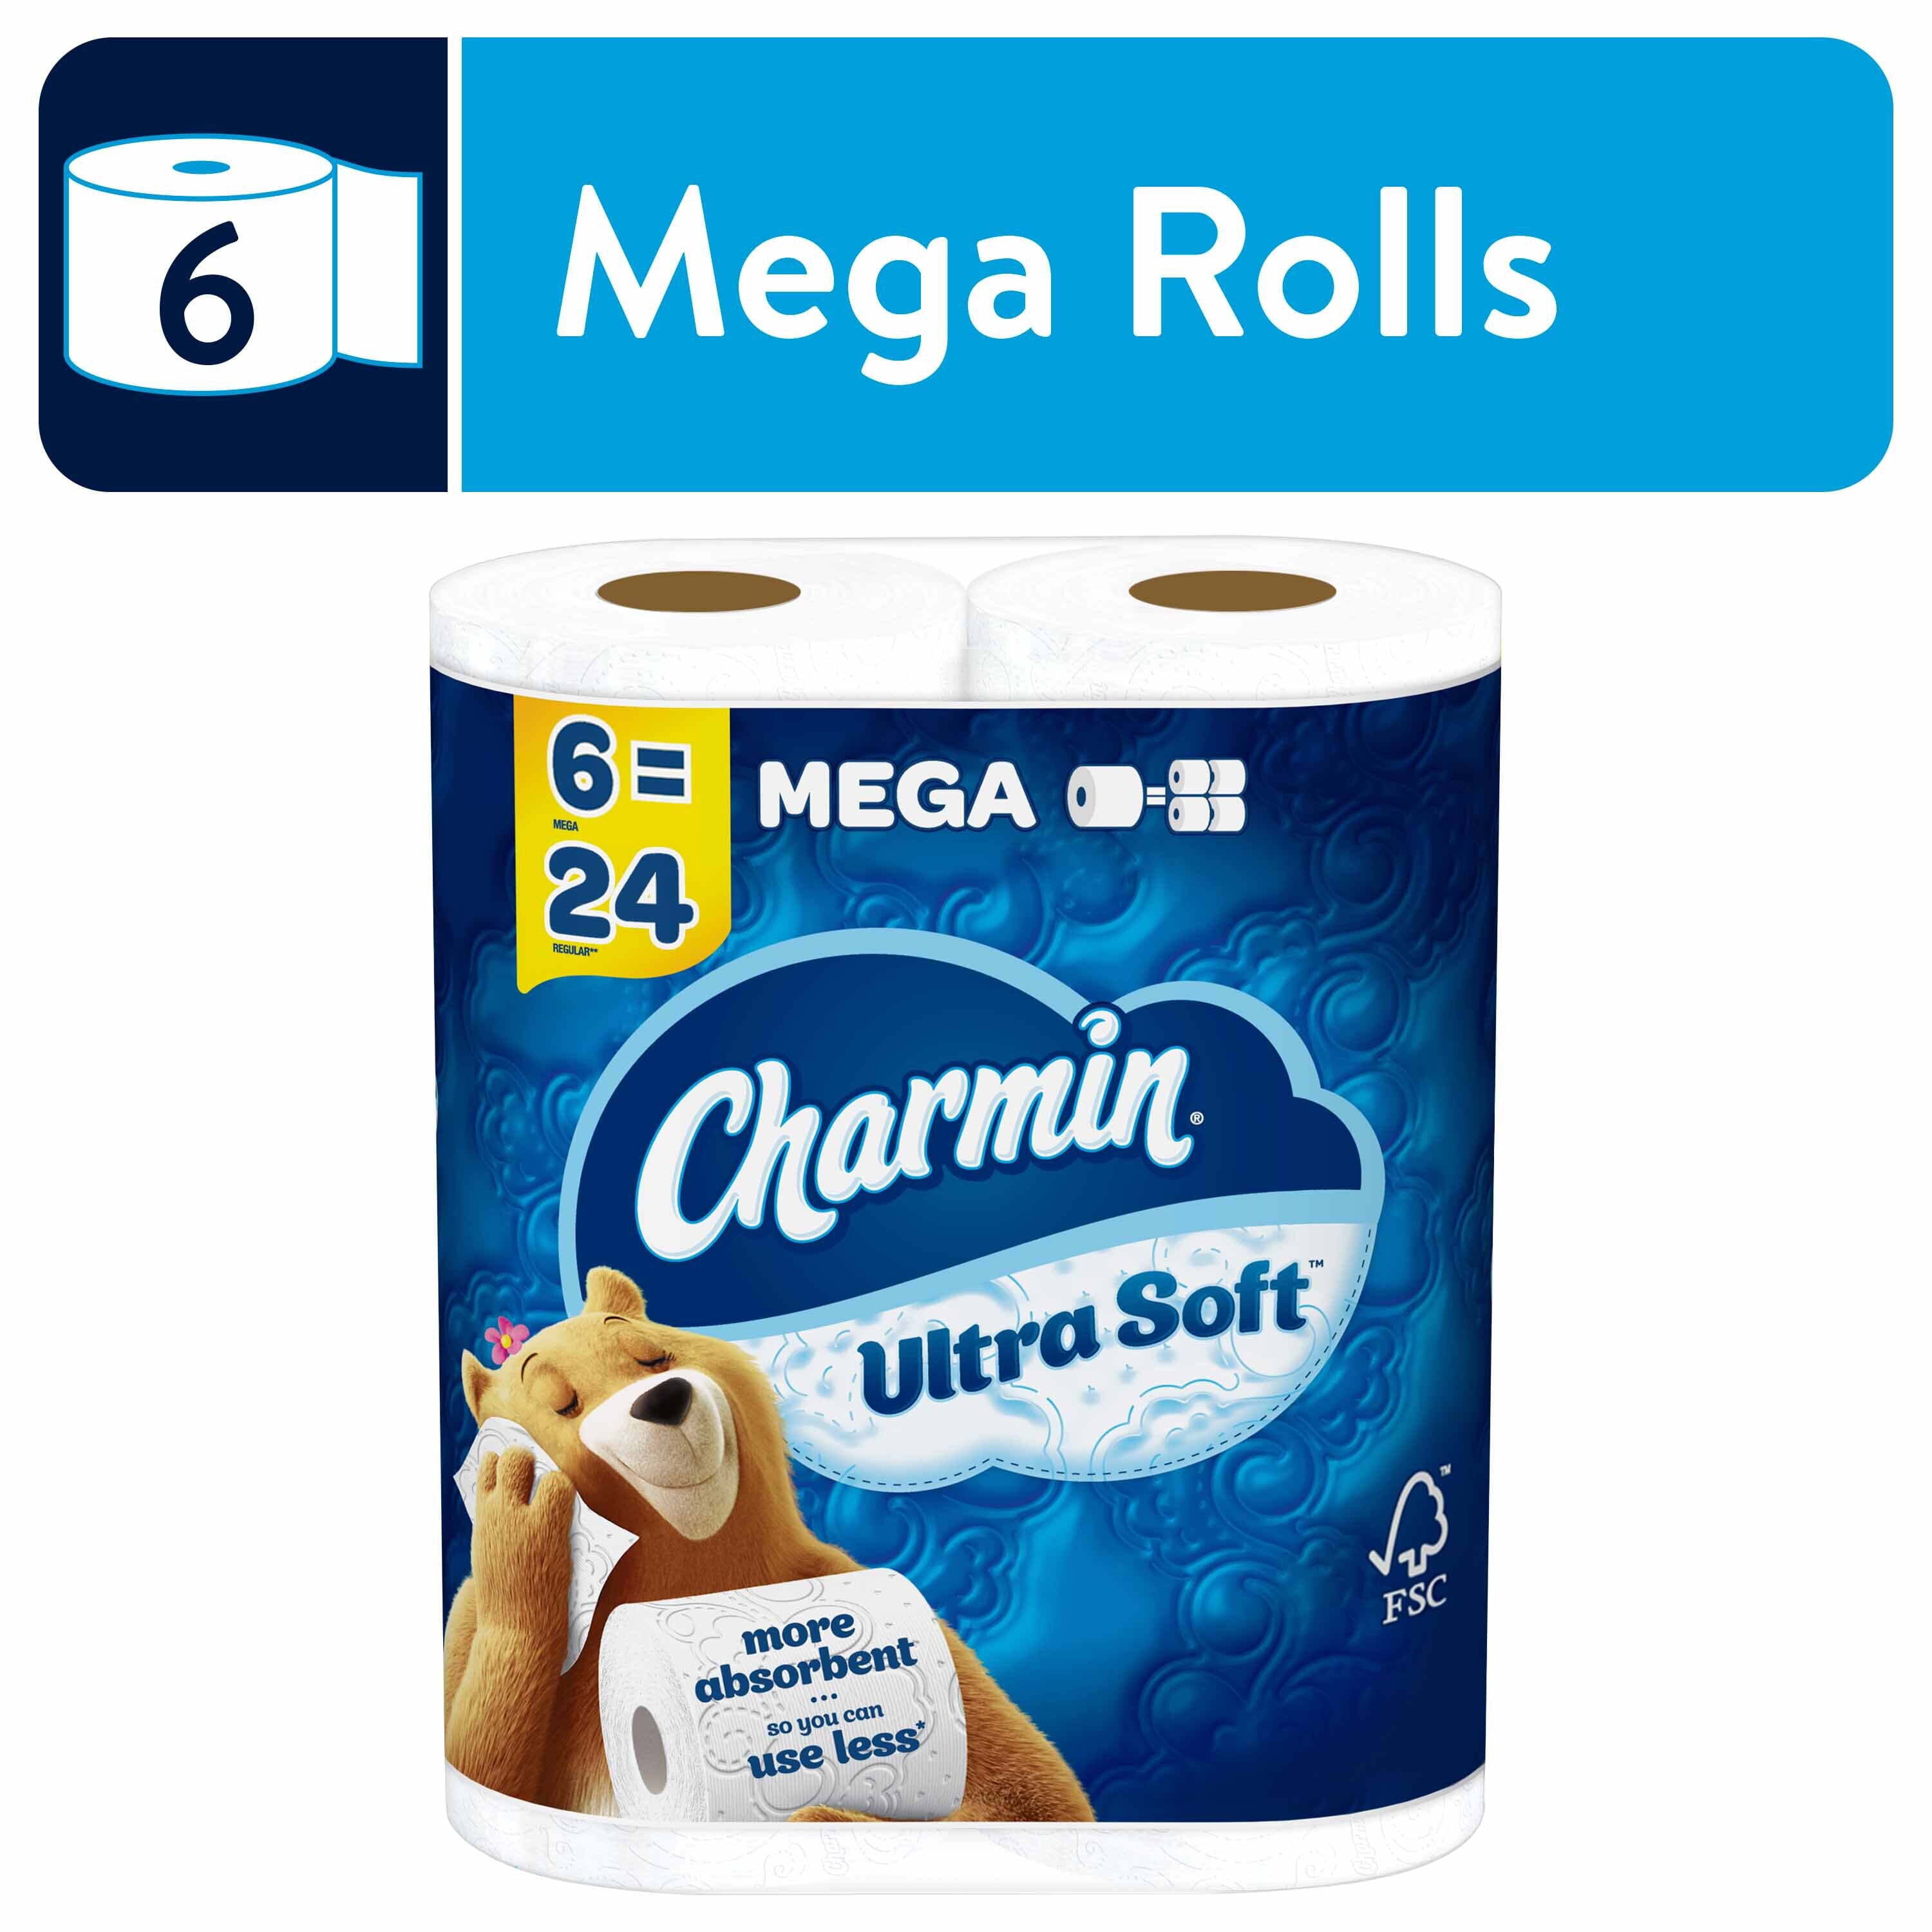 Charmin Ultra Soft Toilet Paper, 6 Mega Rolls